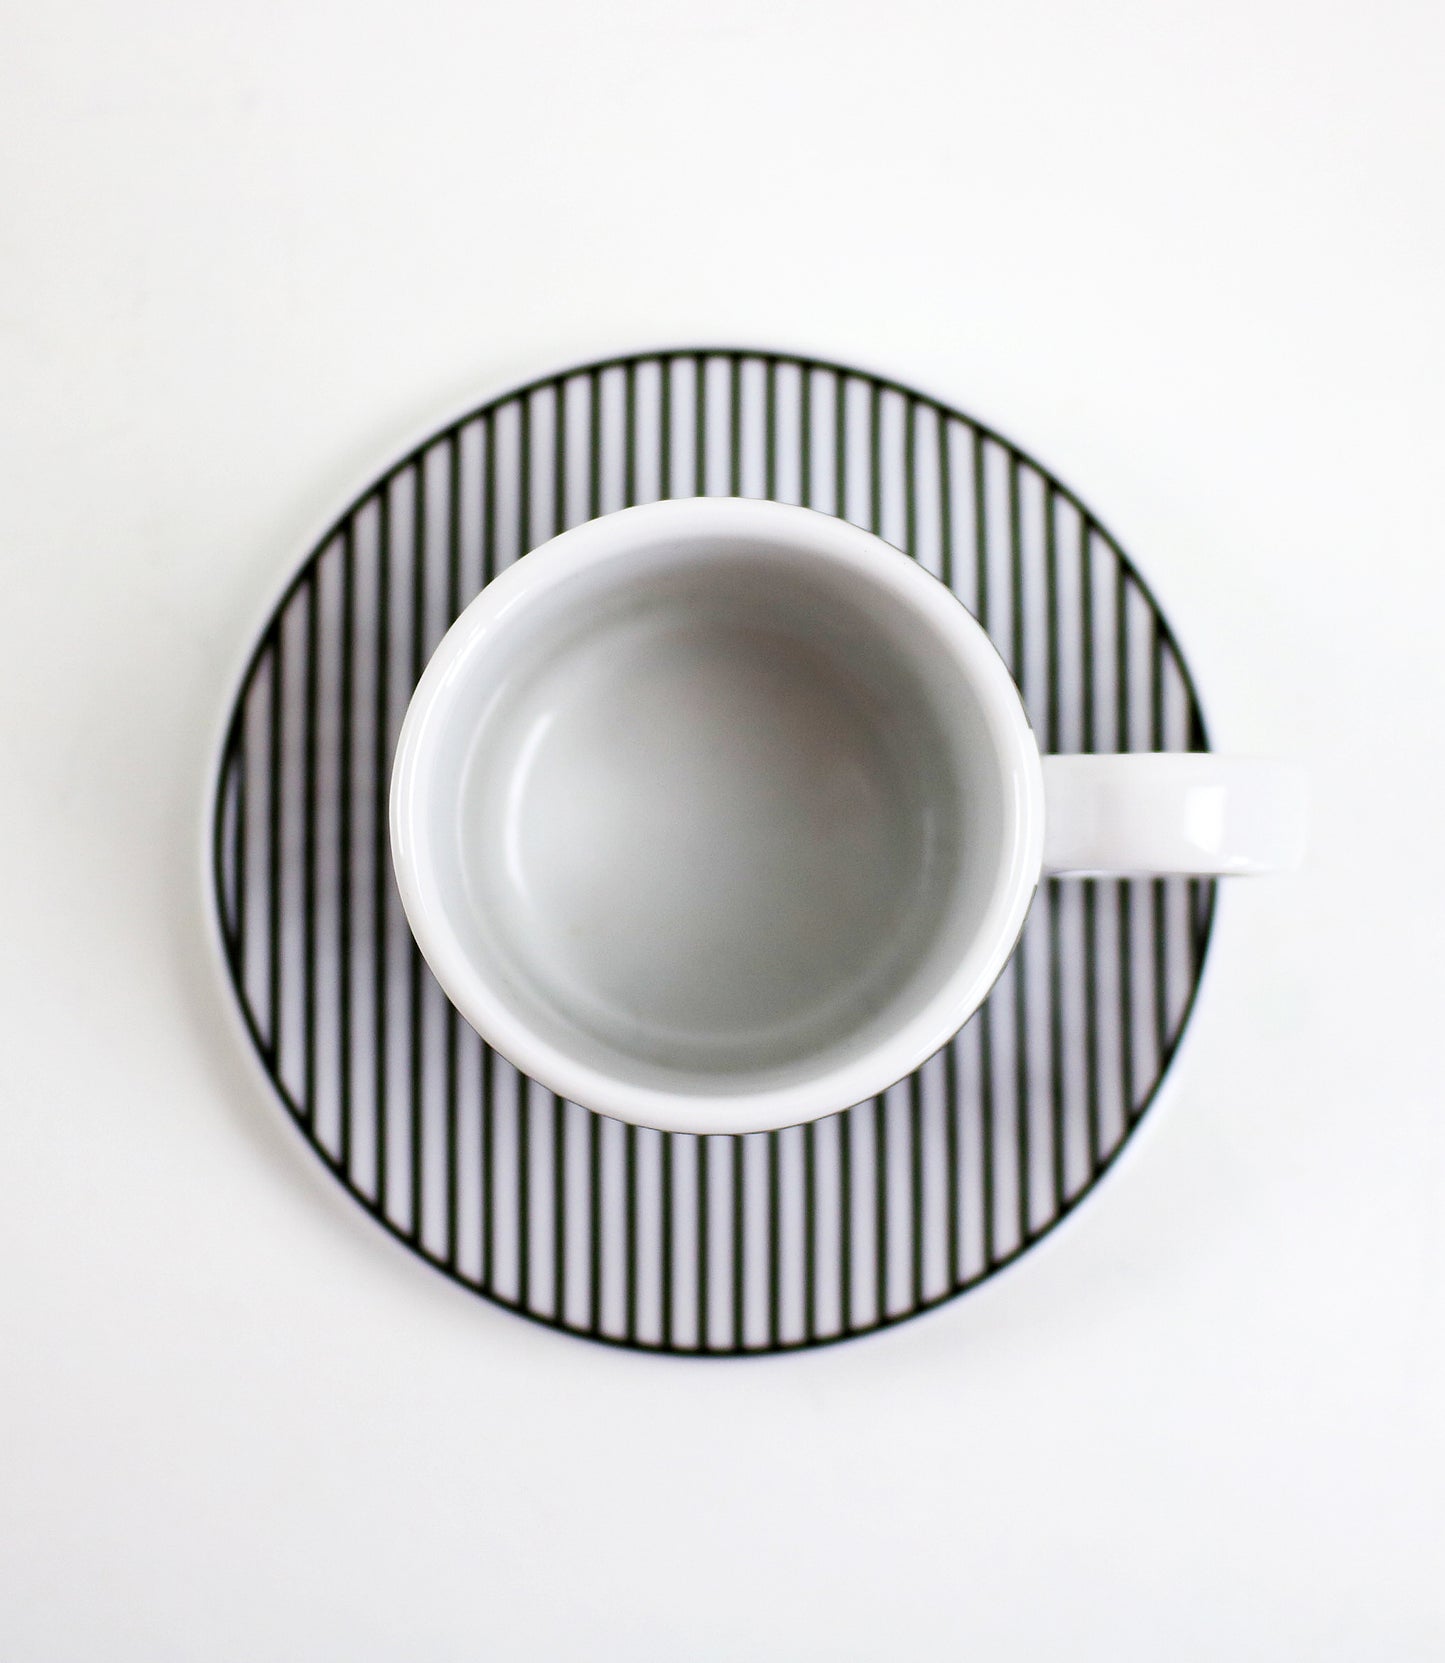 Retired Habitat espresso cup set - Dandy porcelain 2015 Unused stock